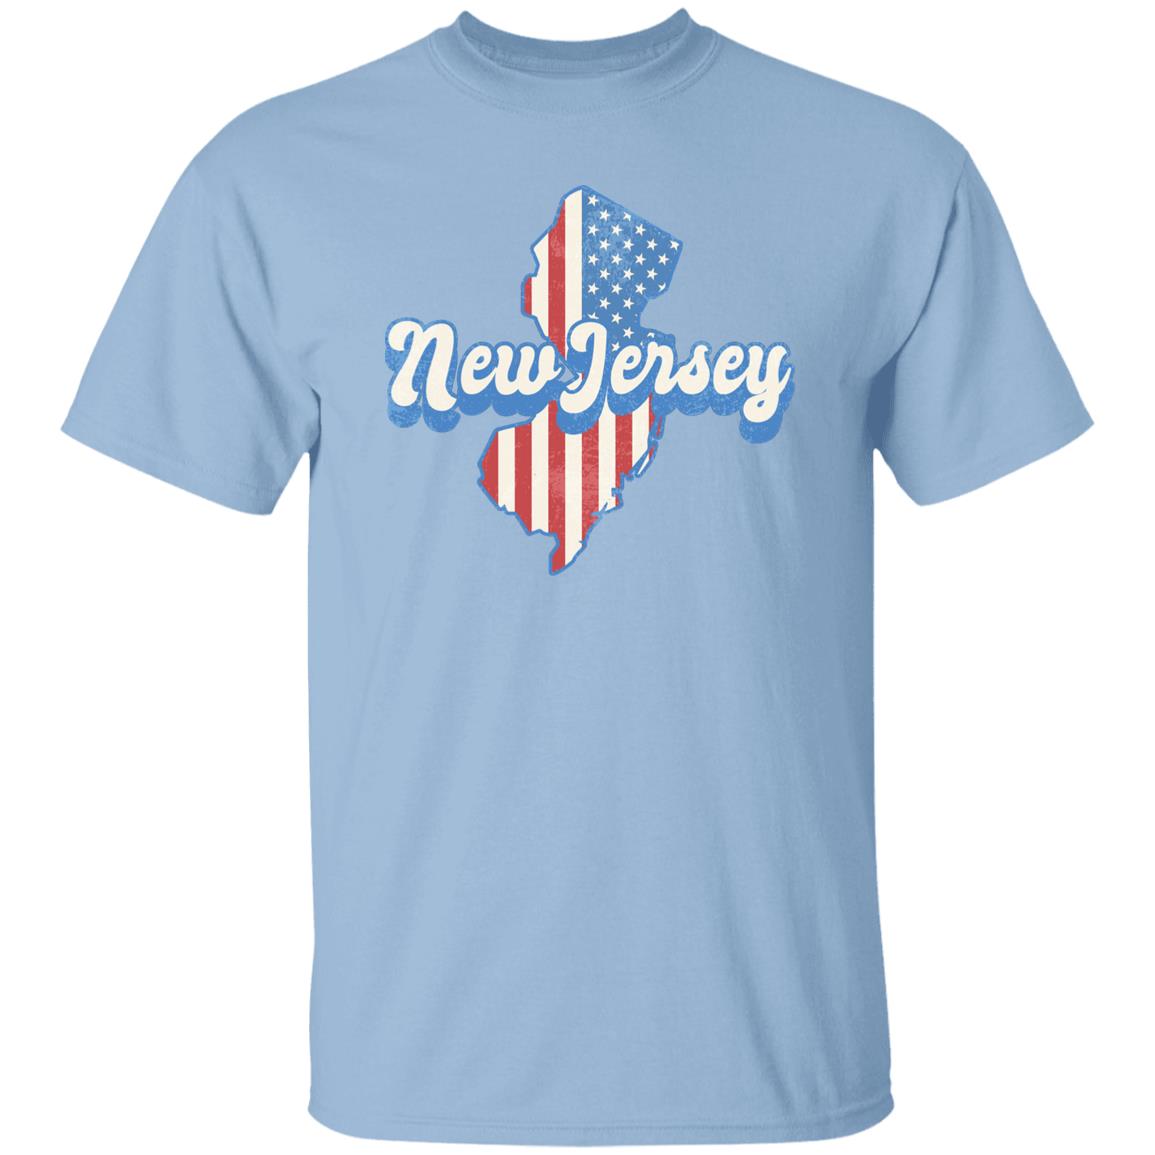 New Jersey US flag Unisex T-Shirt American patriotic NJ state tee White Ash Blue-Light Blue-Family-Gift-Planet